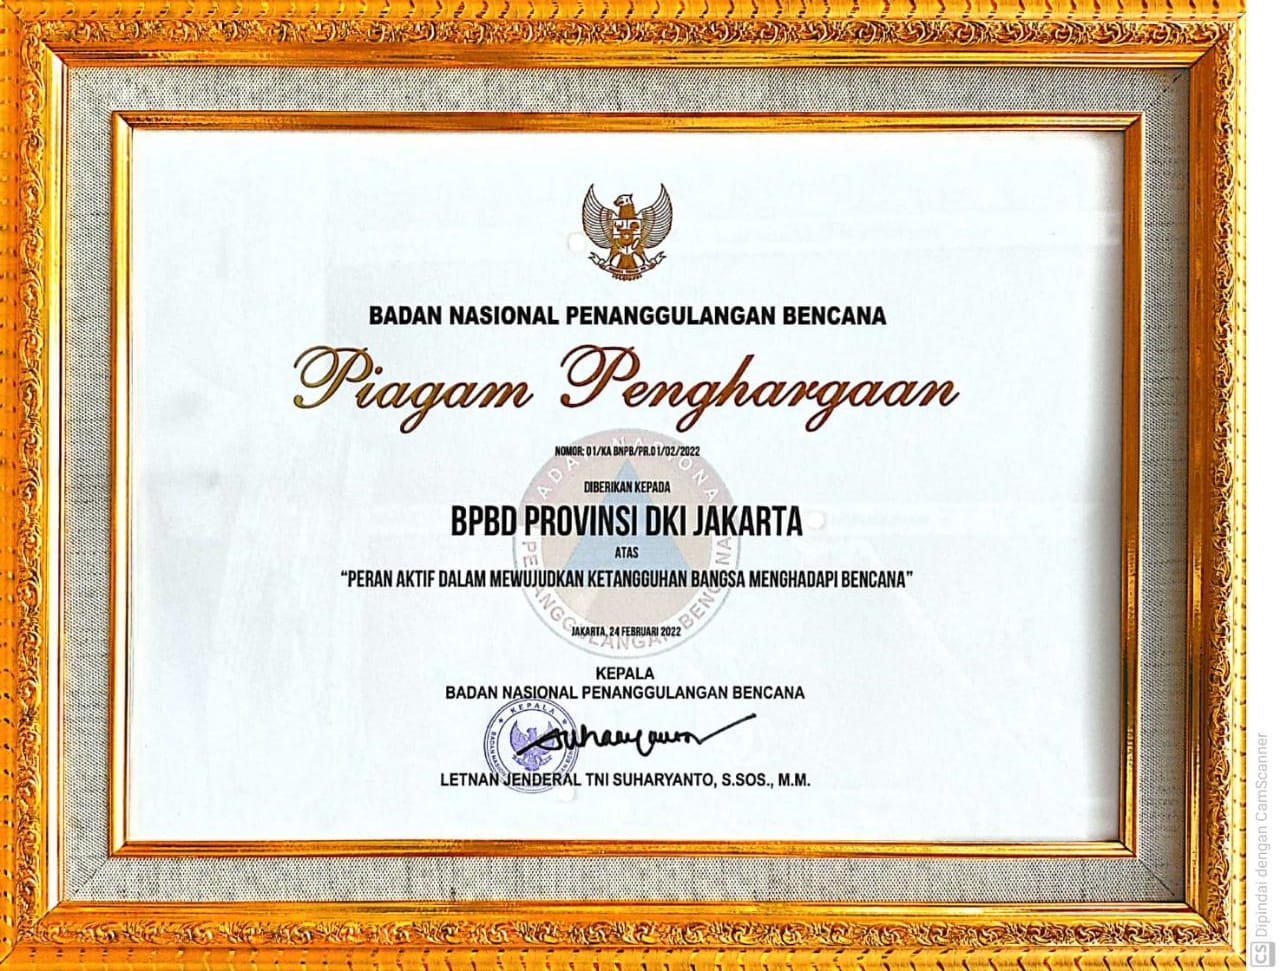 BPBD DKI Jakarta Memperoleh Penghargaan BPBD Provinsi / Kabupaten / Kota Terbaik